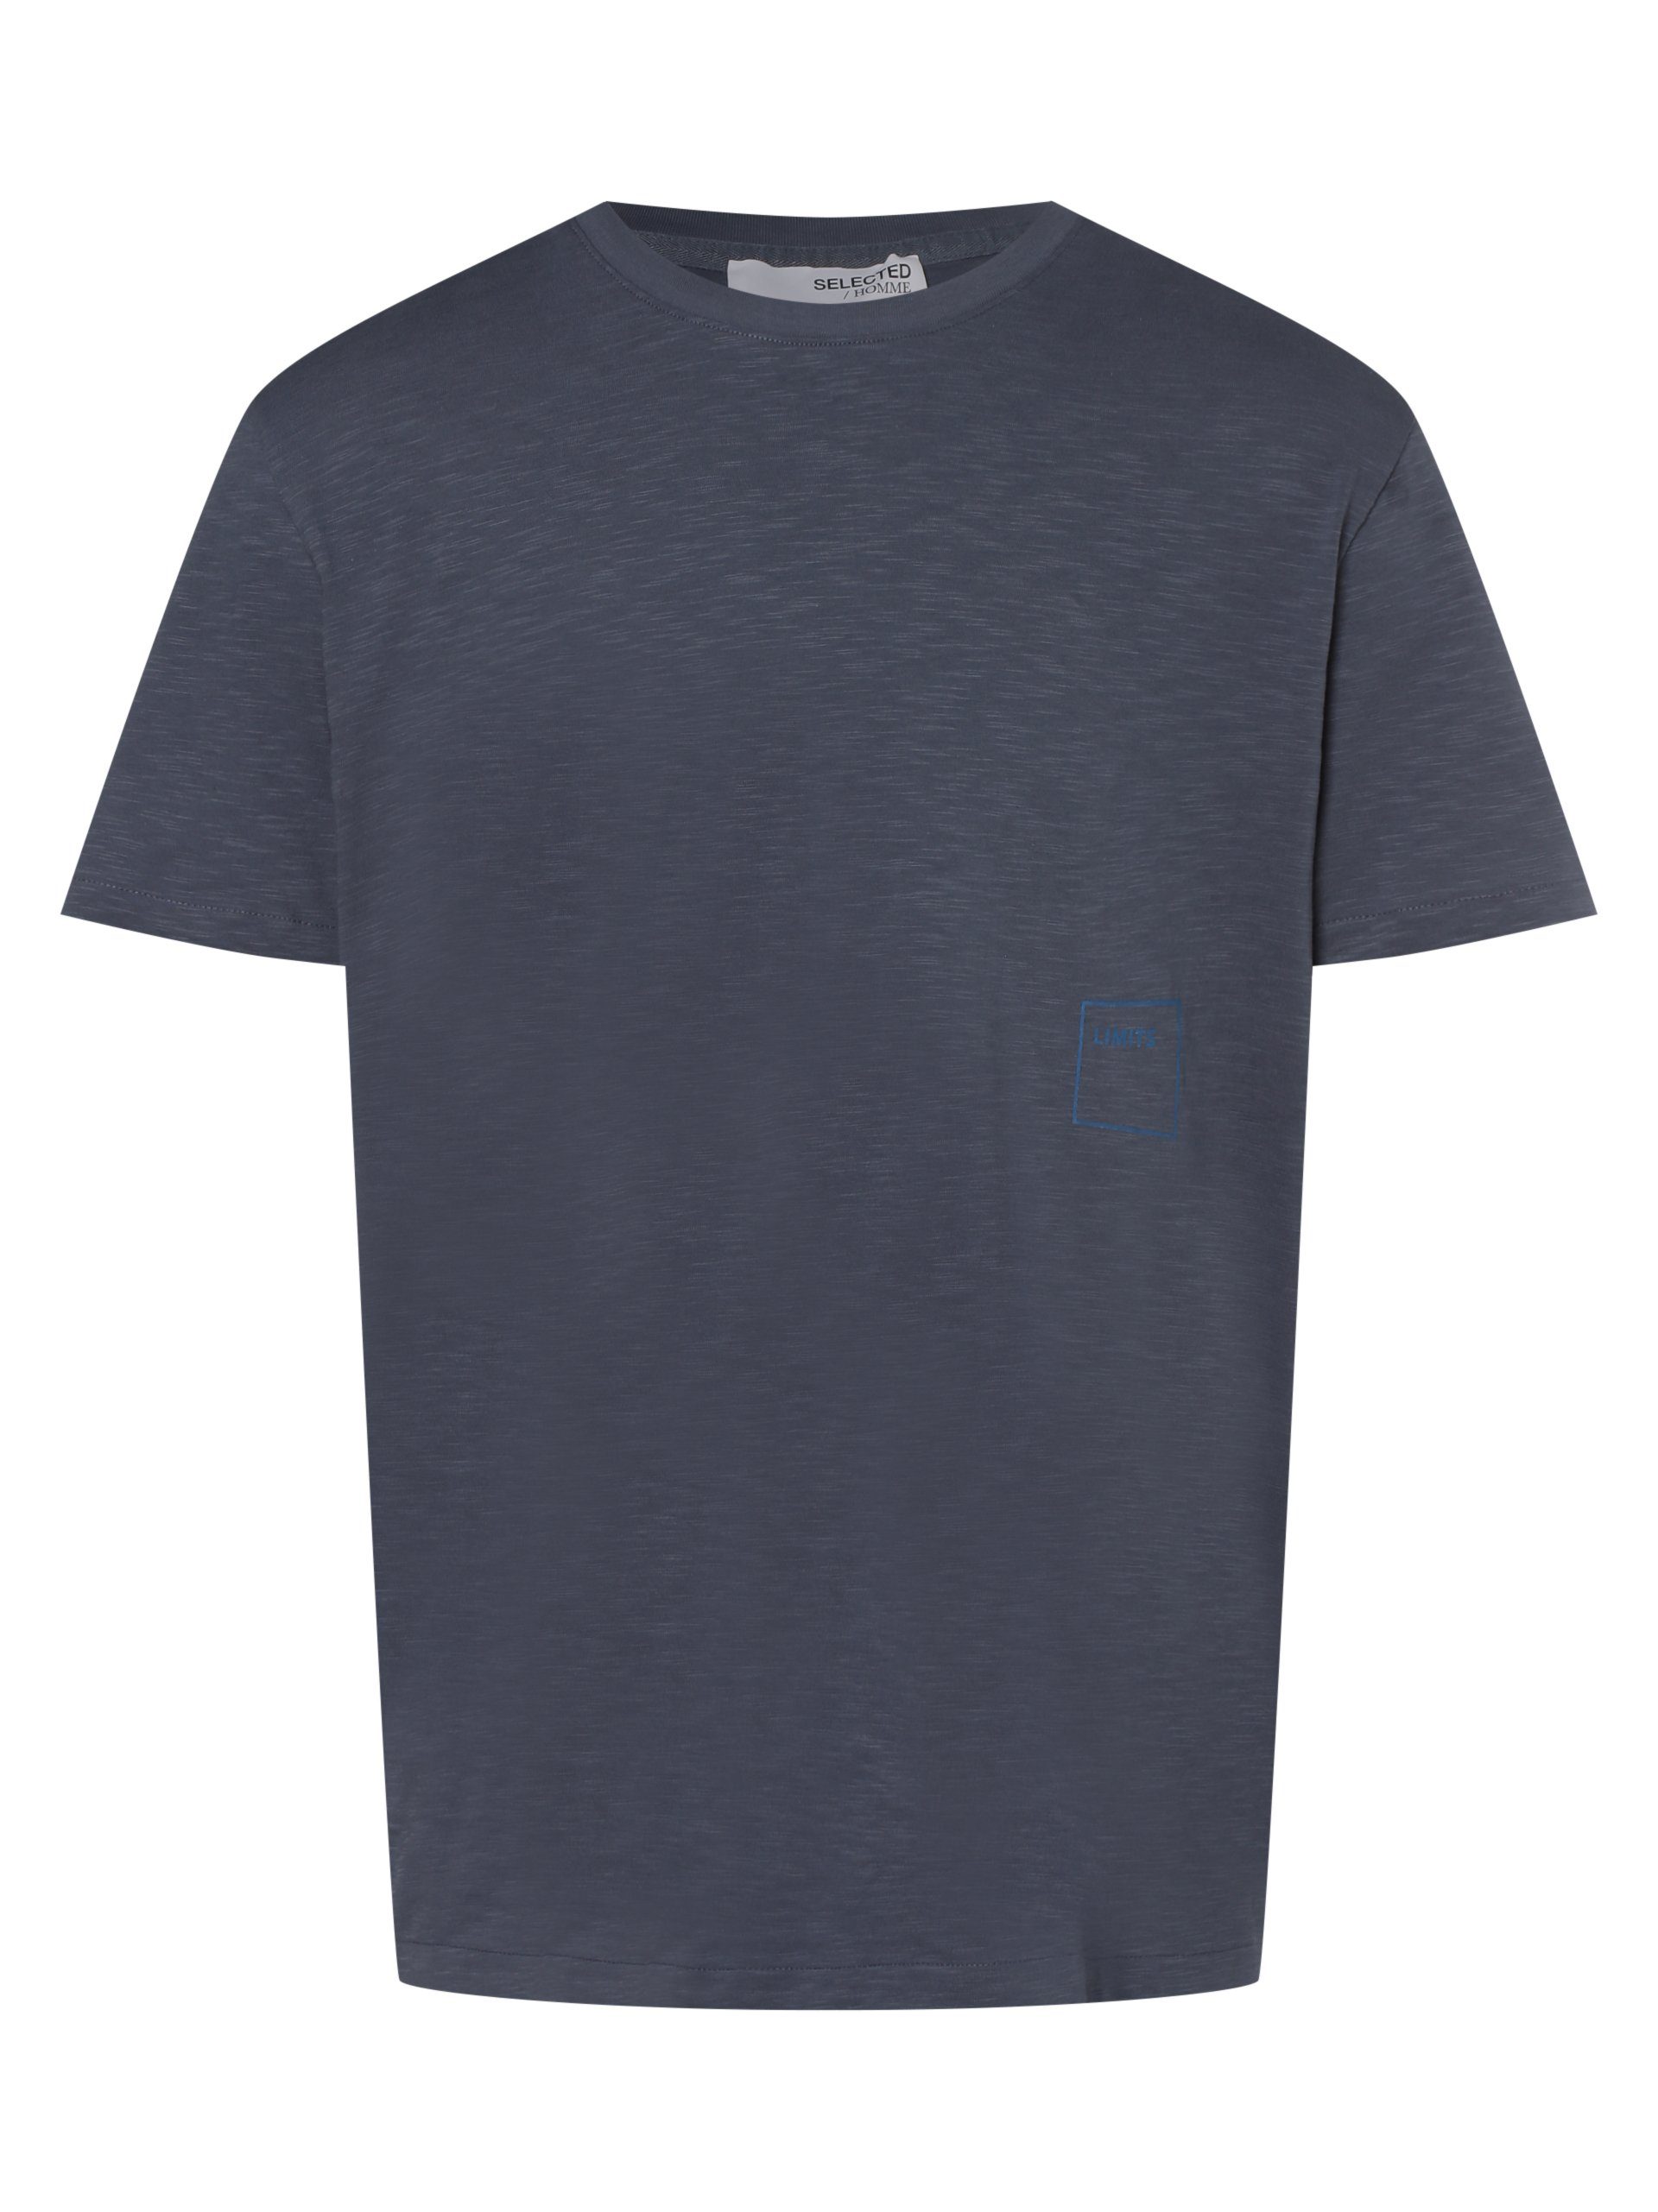 SELECTED HOMME T-Shirt SLHRelaxbo indigo